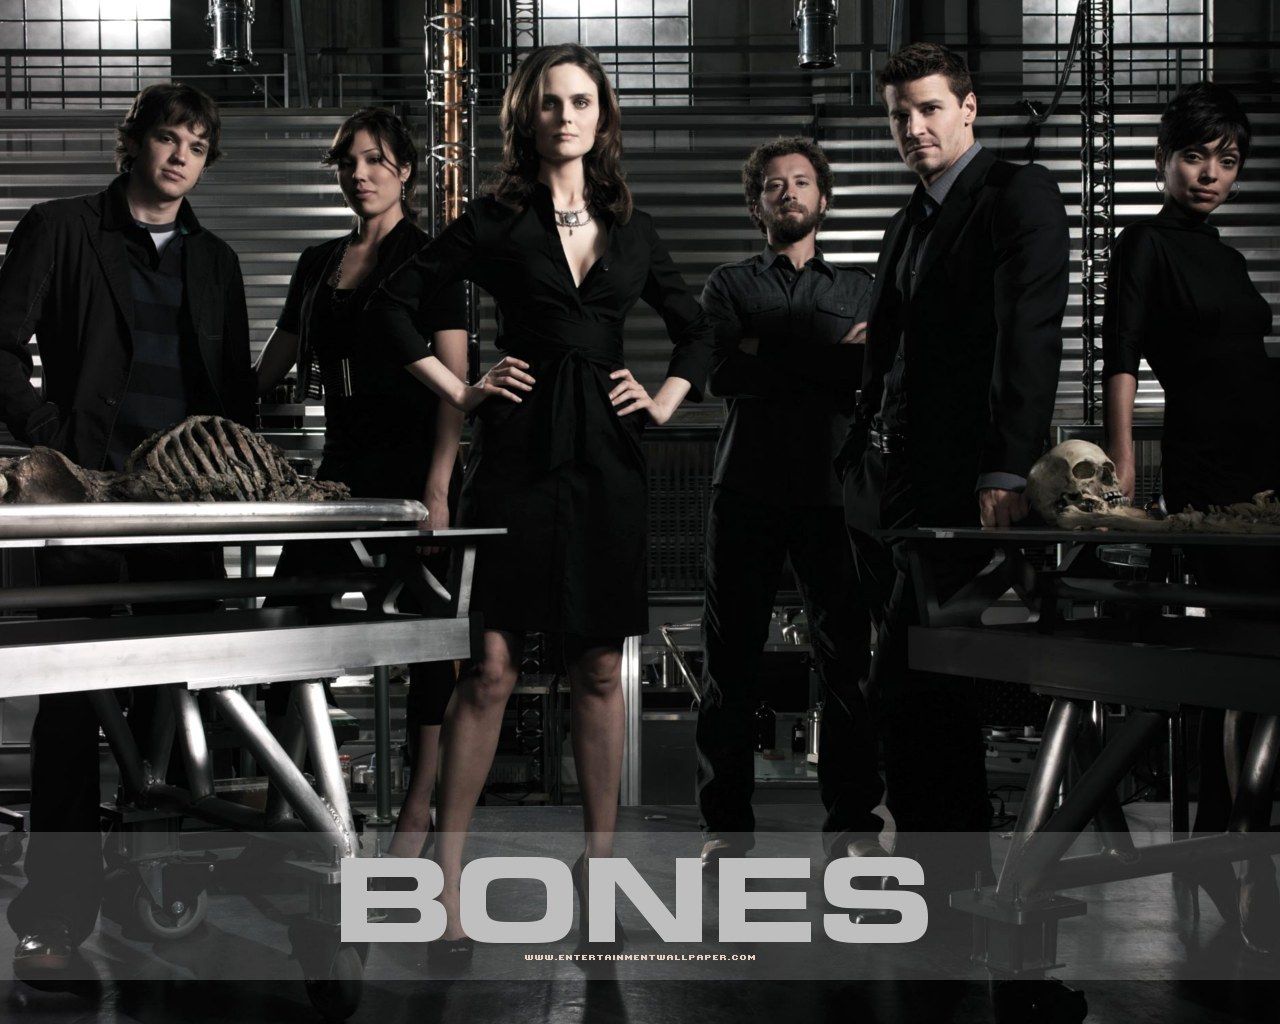 Image Of Bones Tv Show Series HD Poster Wallpaper